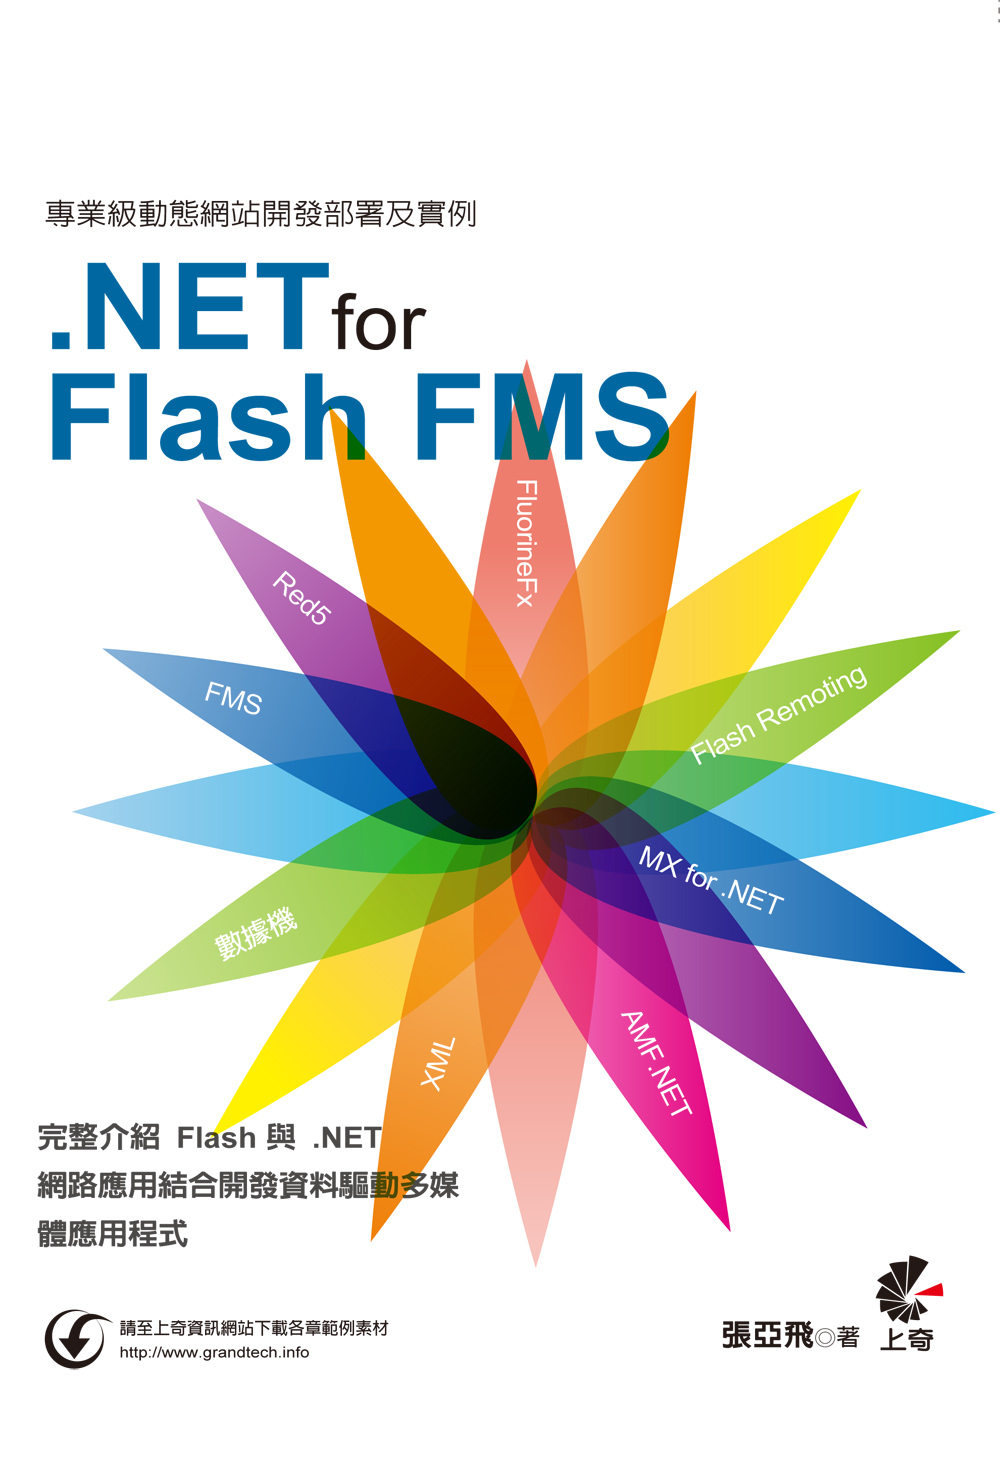 ►GO►最新優惠► 【書籍】專業級動態網站開發部署及實例：使用.NET for Flash FMS